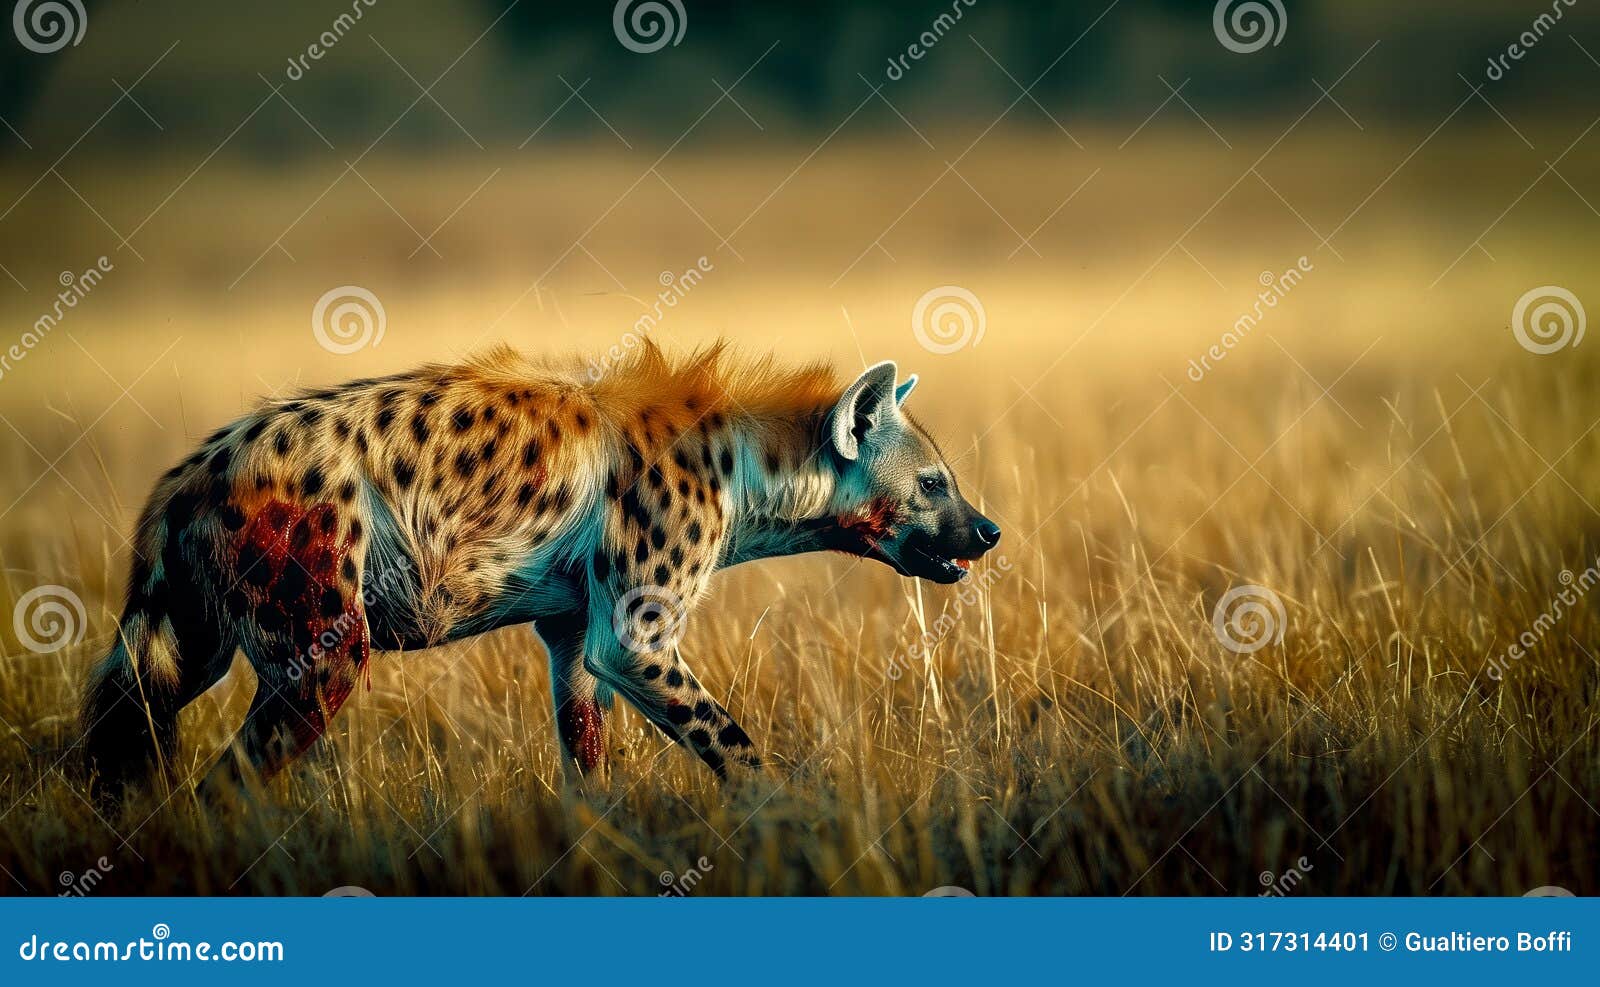 majestic hyena walking in the wild at twilight